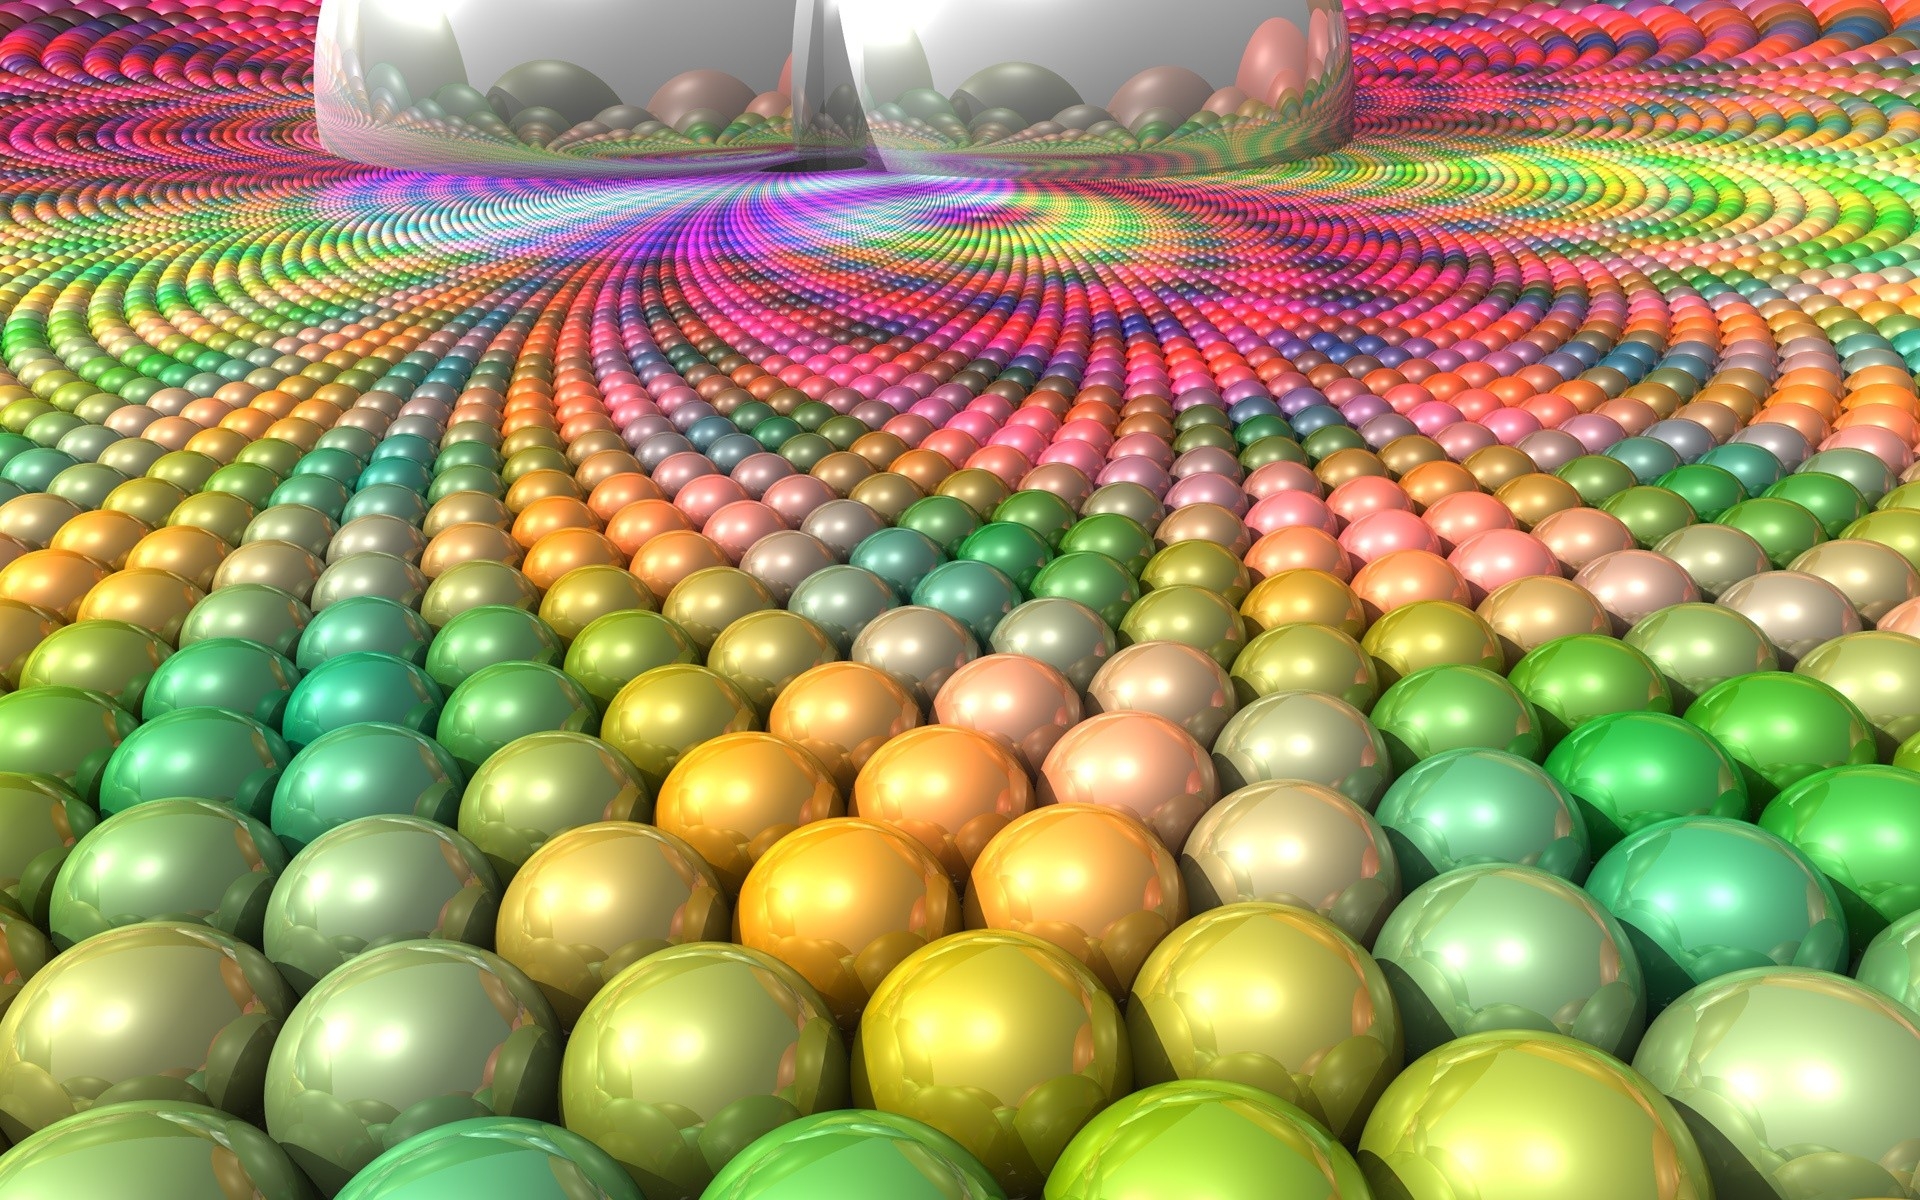 Bowling Ball Wallpaper, HD Bowling Ball Background, Free Image Download